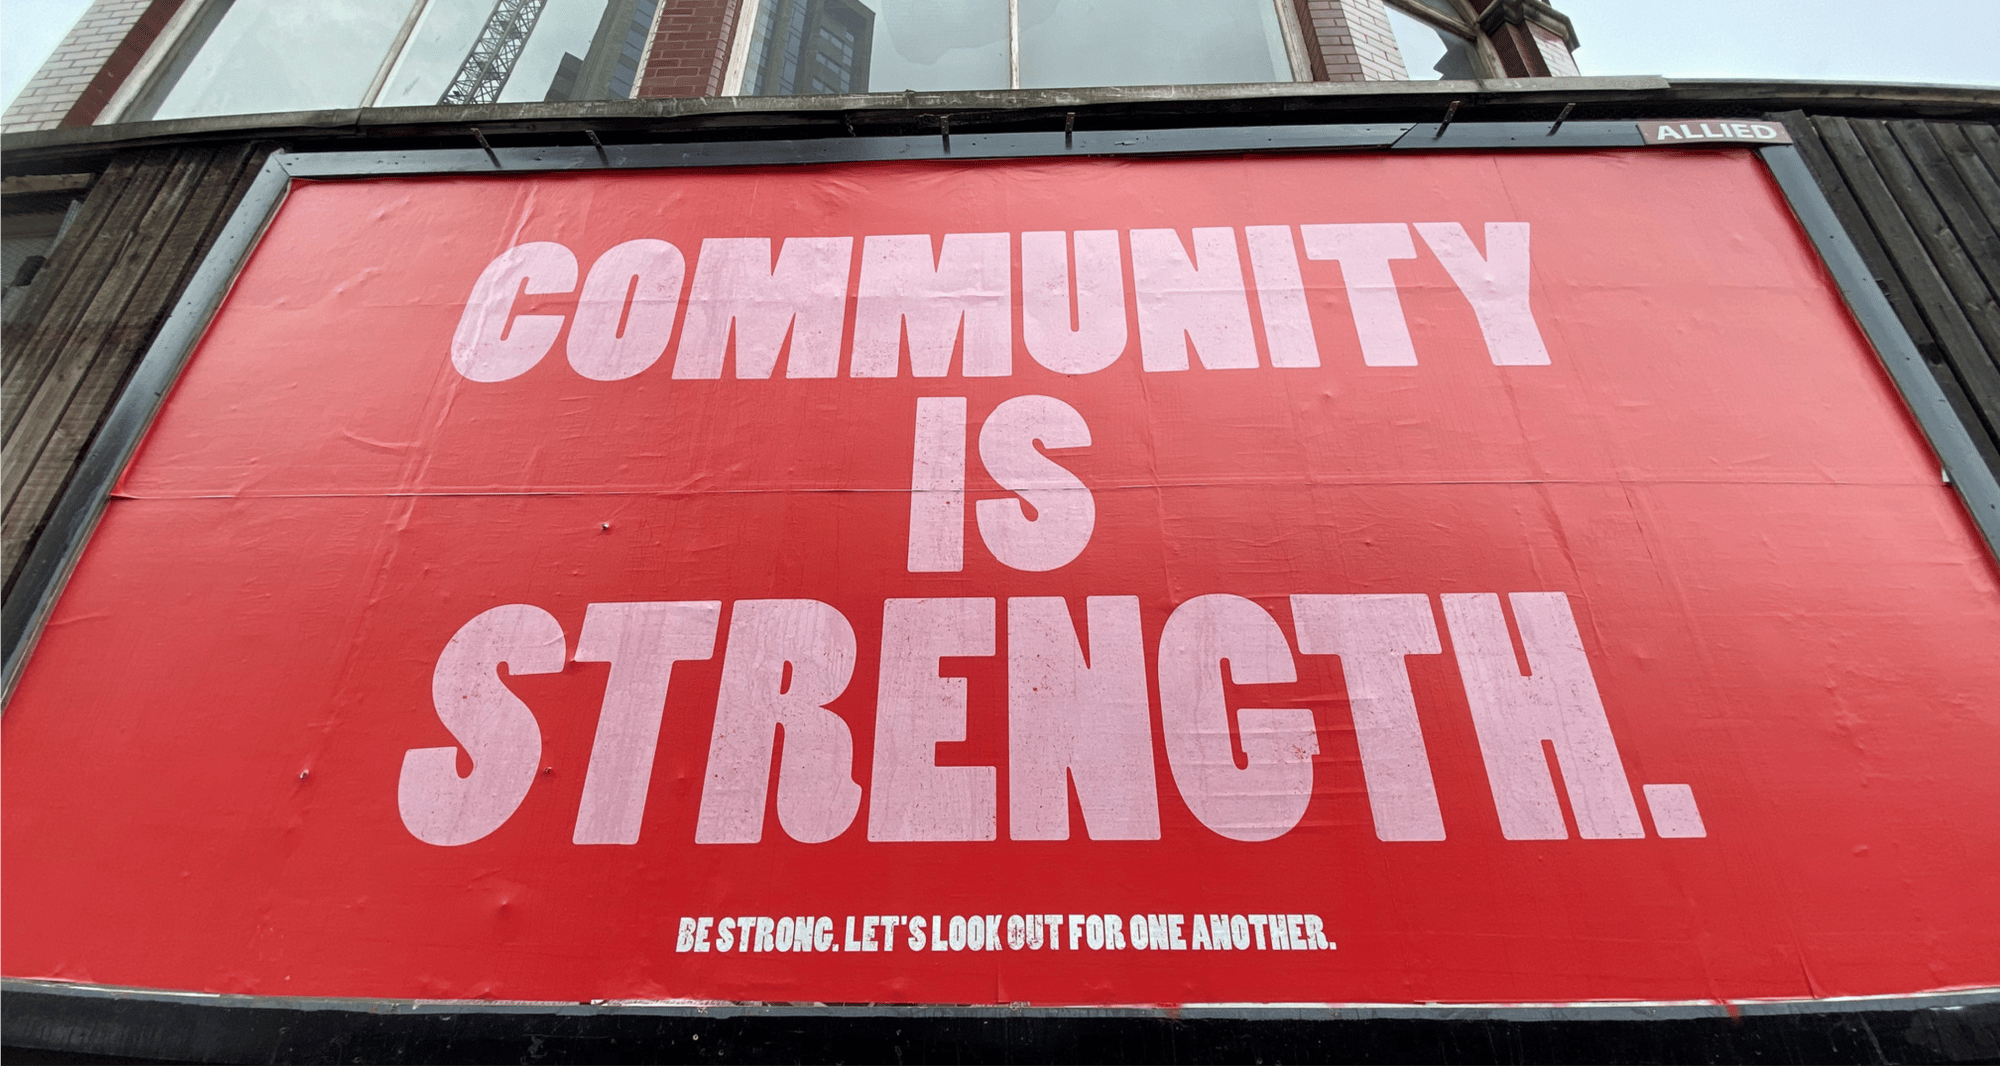 community-is-strength